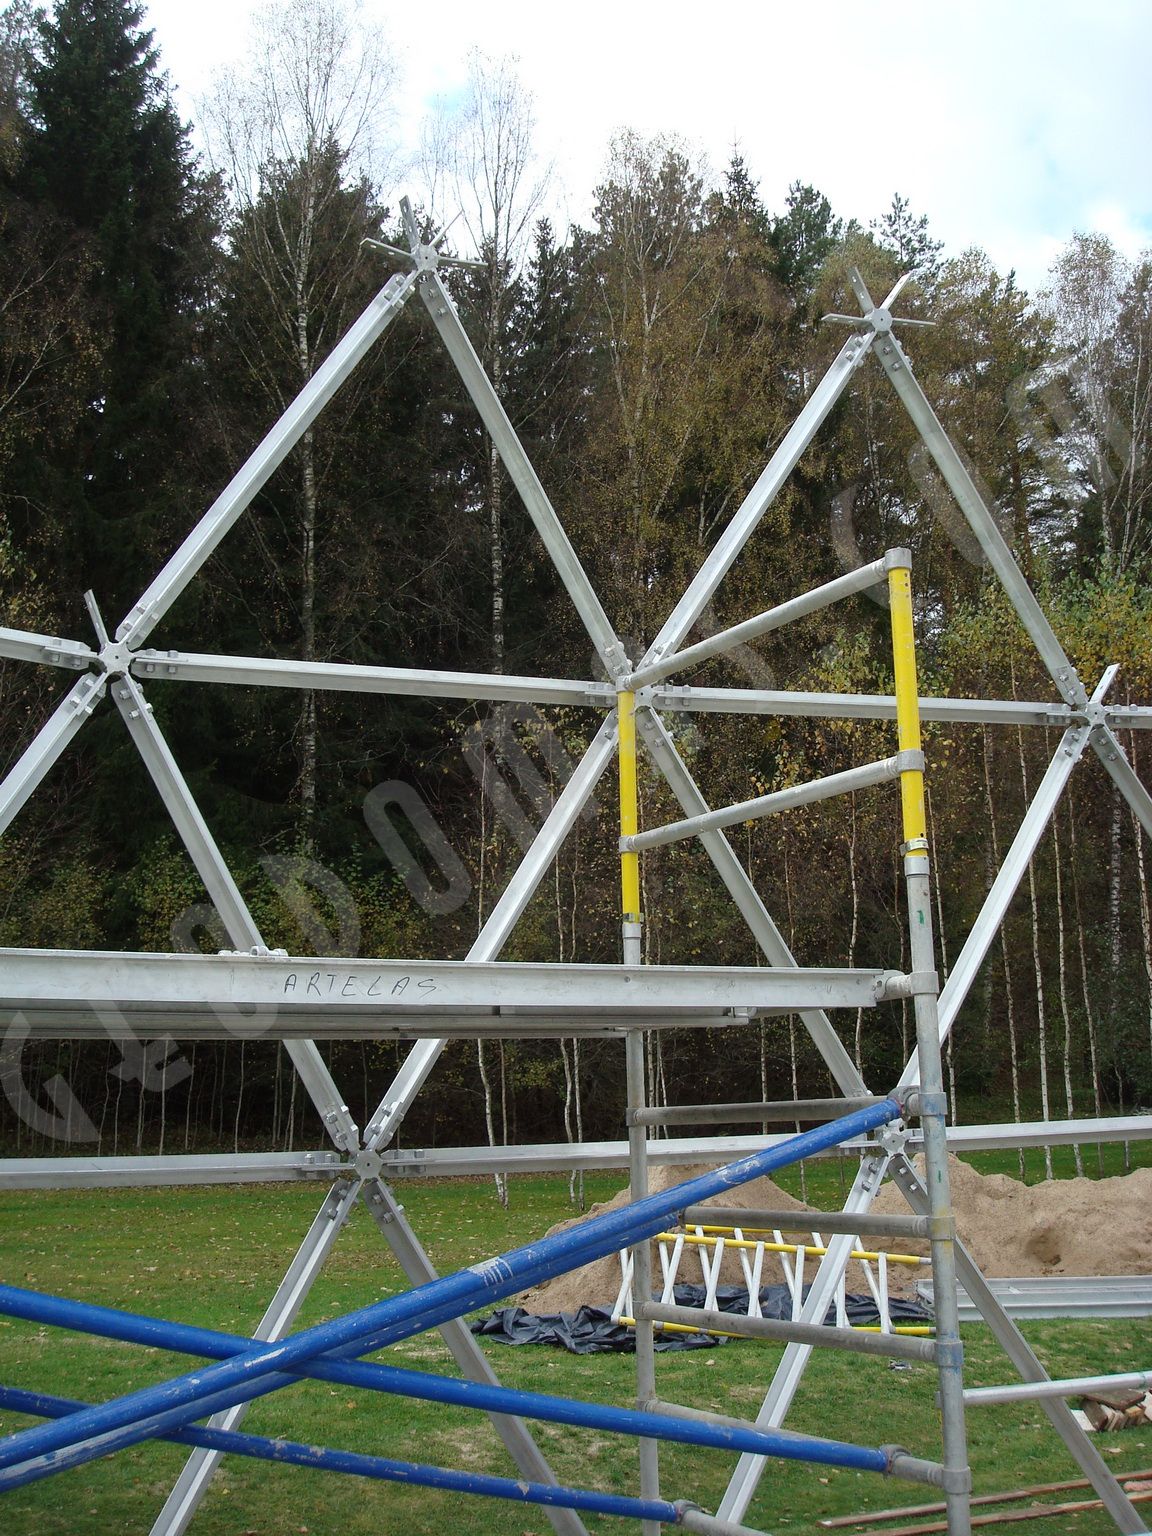 Pyramid of Merkinė @ Glass Geodesic Dome Ø23m, Merkine, Lithuania